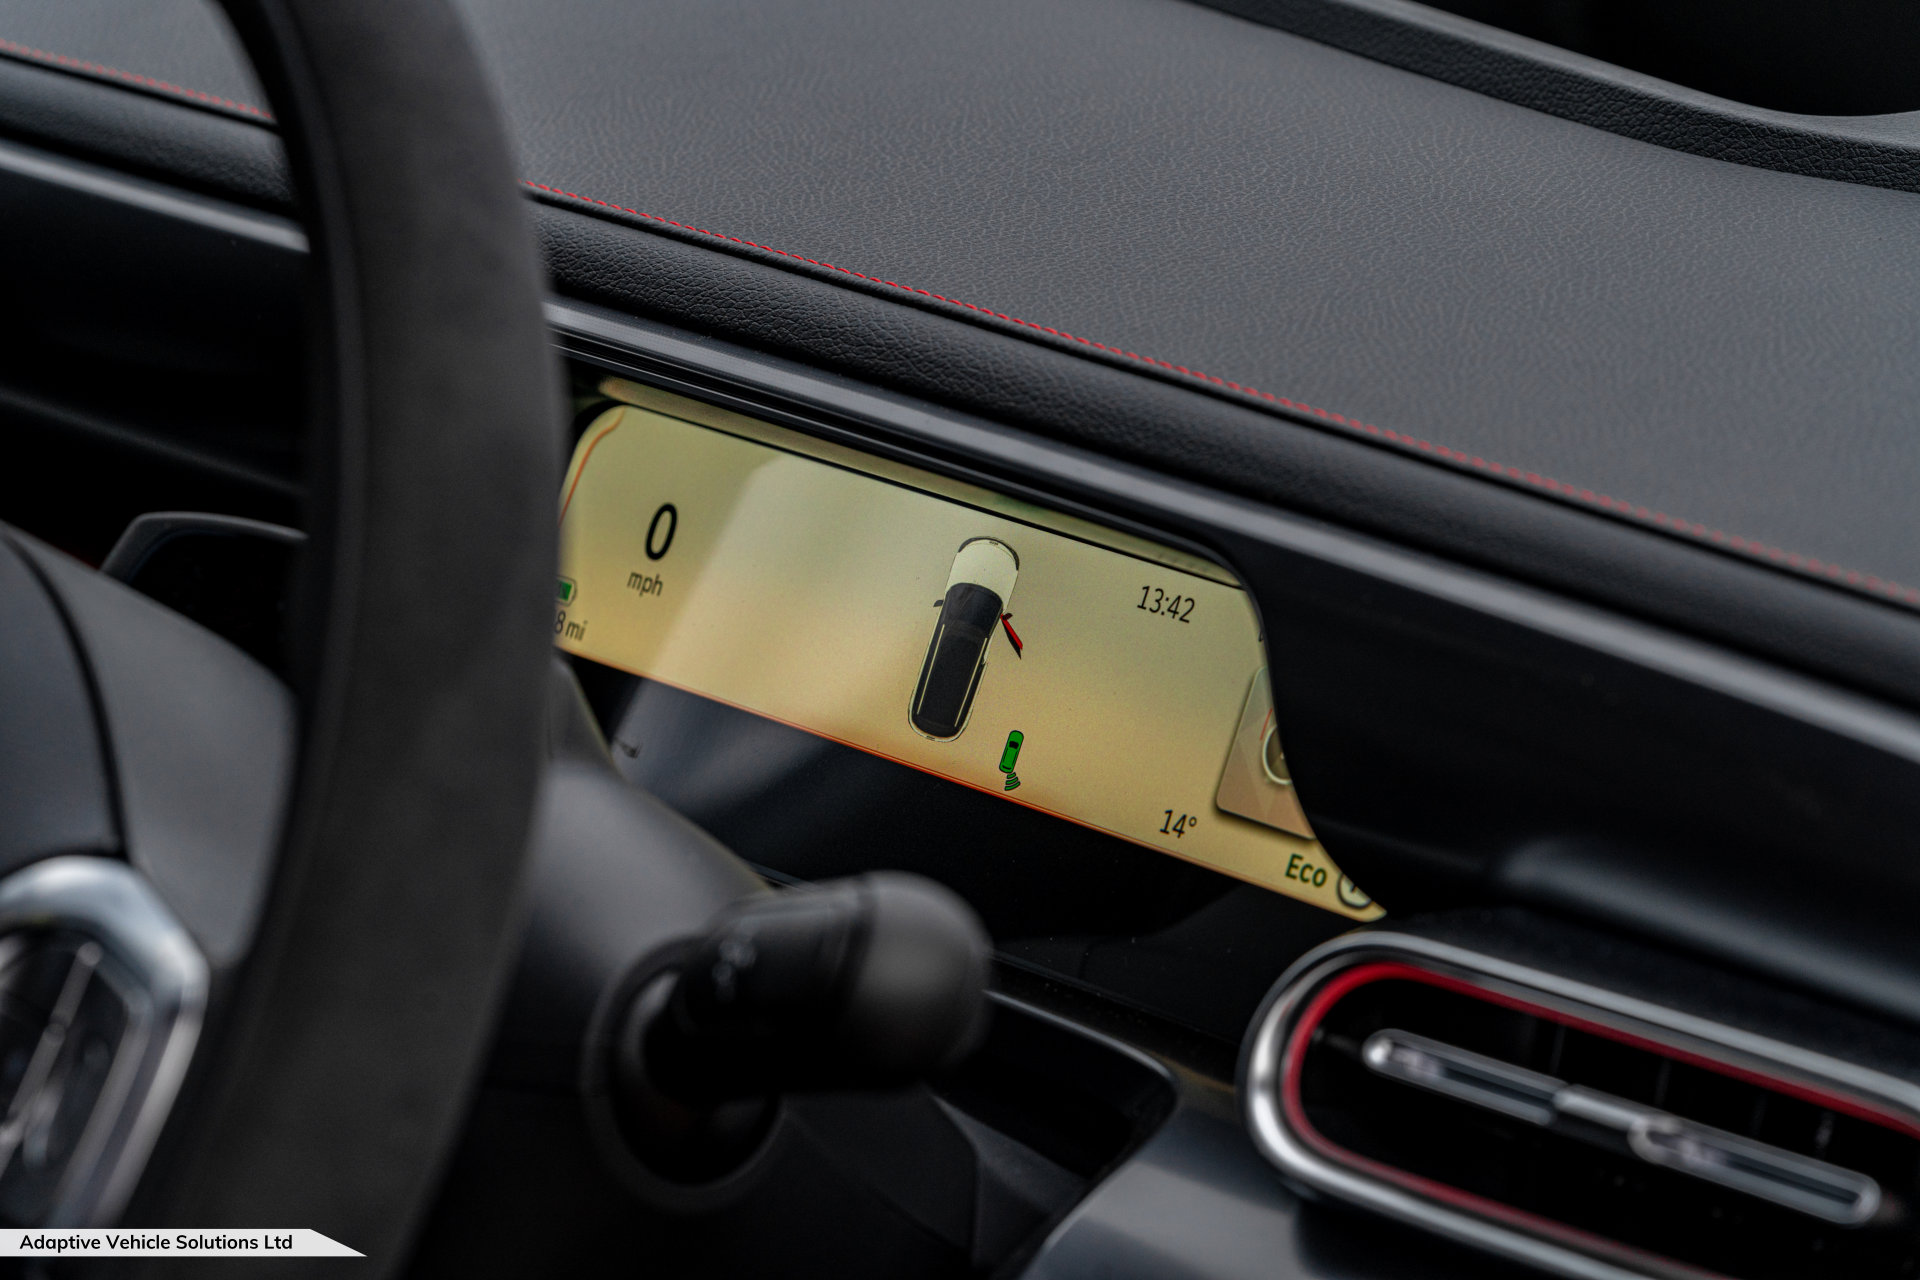 Brabus Smart #1 Electric driver information display